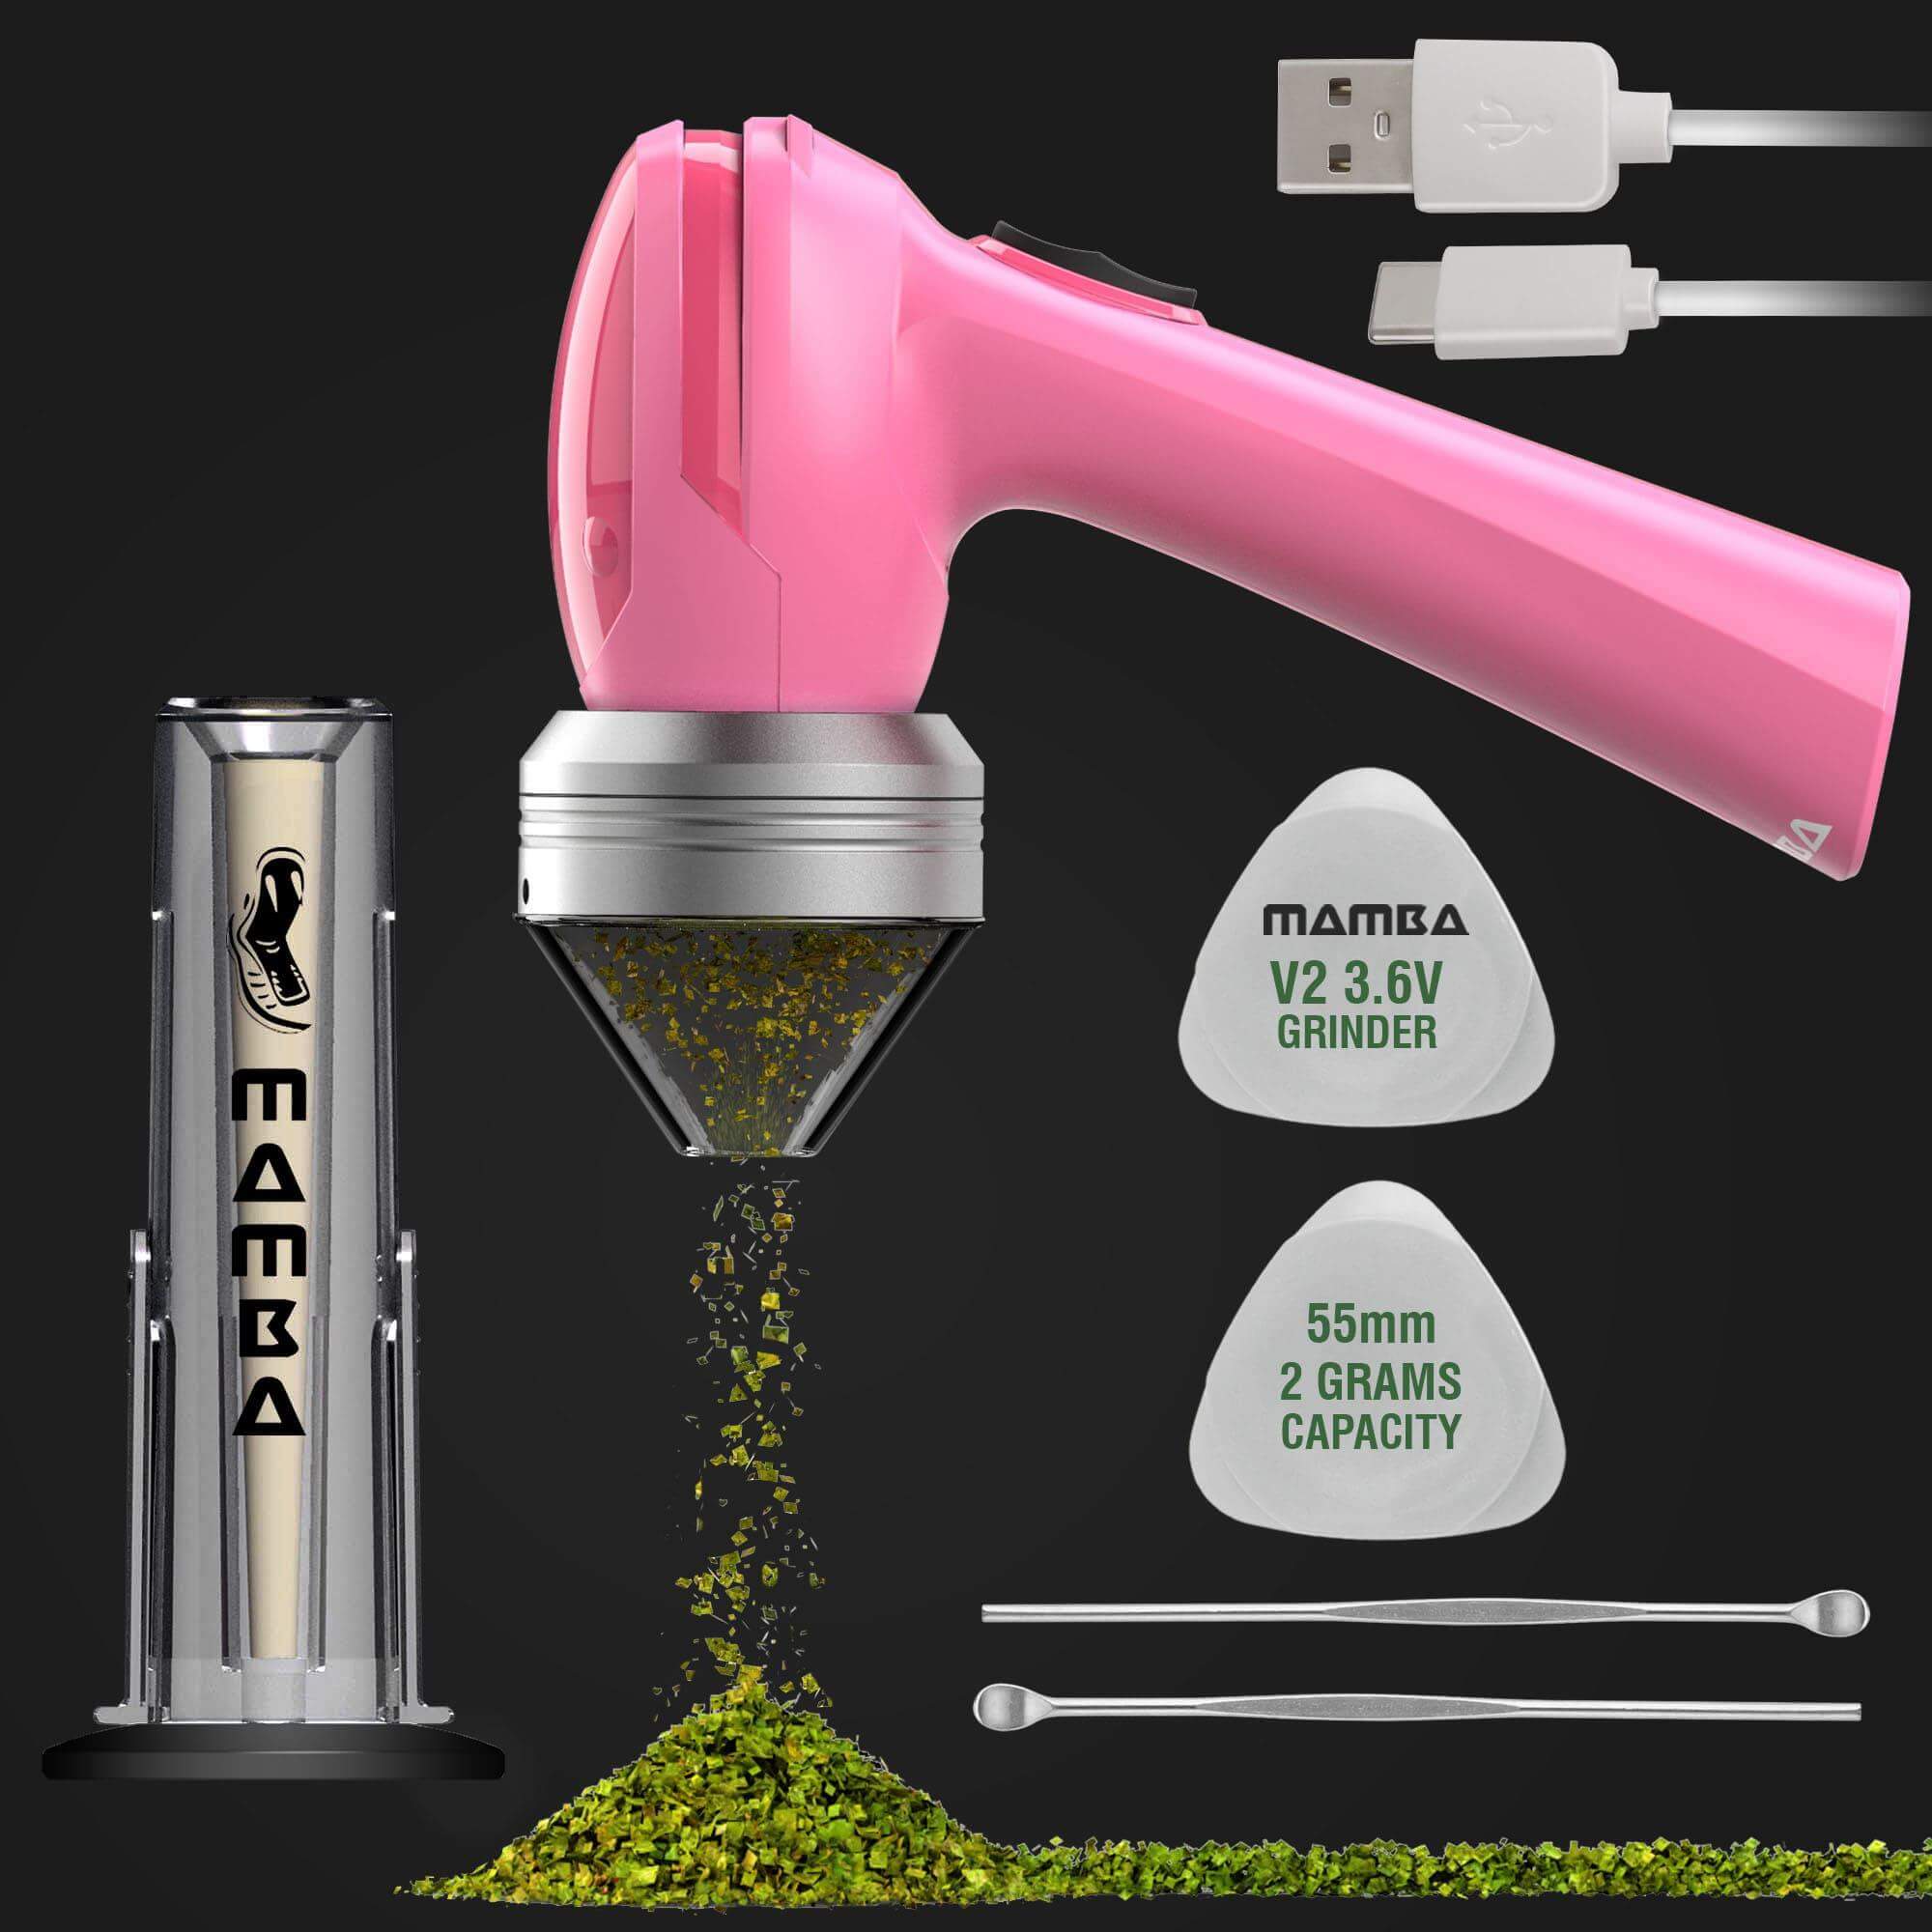 Mamba V1 Electric Herb Grinder – Mamba Grinders™